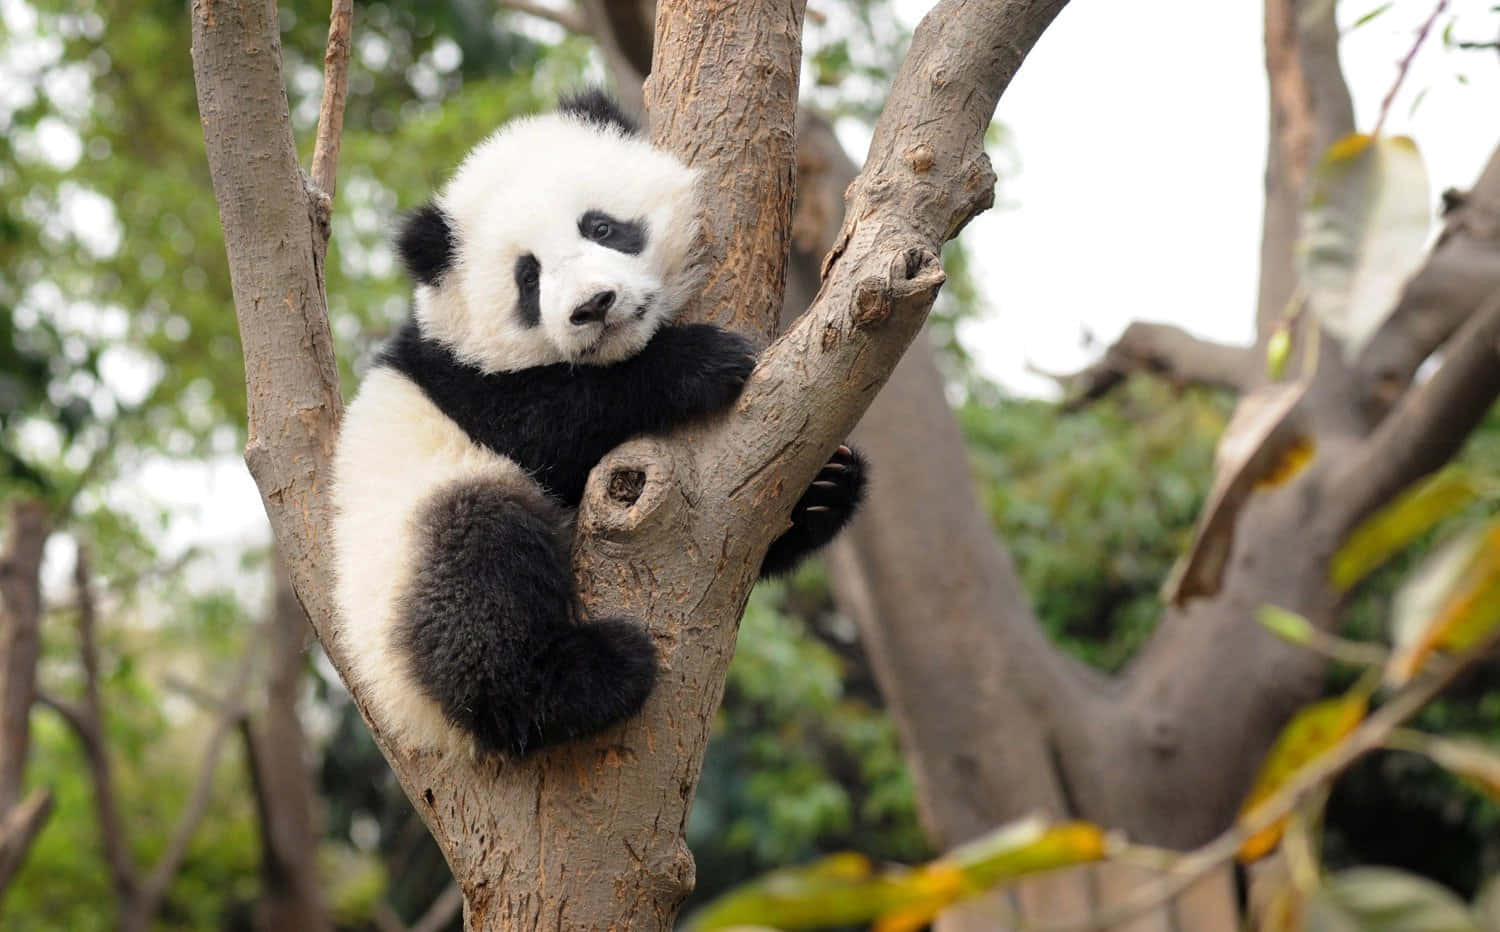 “Look at that cute panda!"